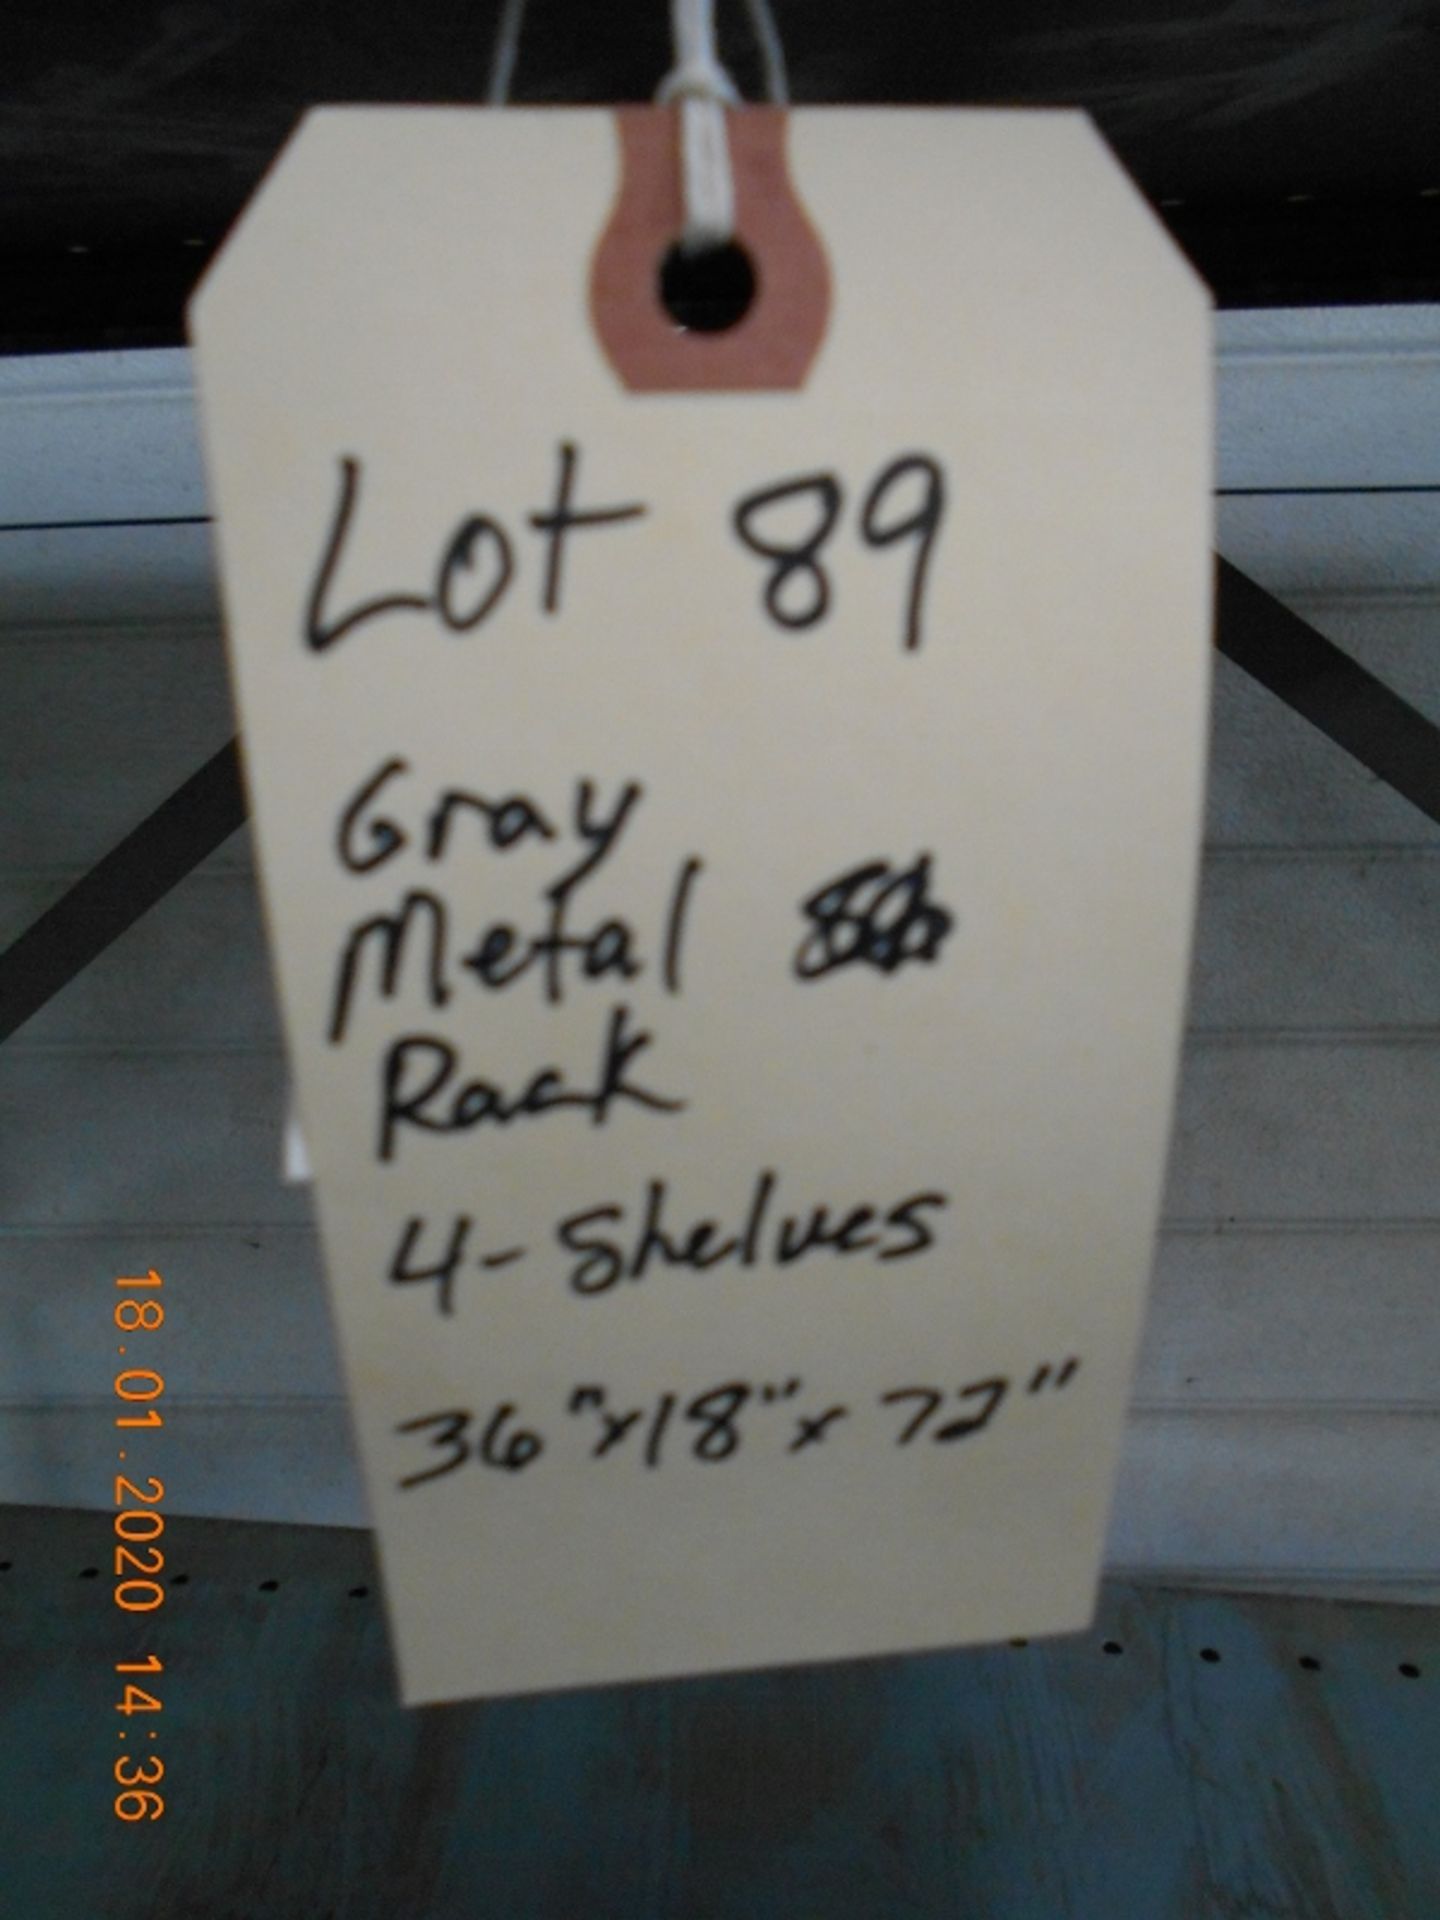 Gray Metal Rack, 4 - Shelves, 36"x18"x72" - Image 2 of 2